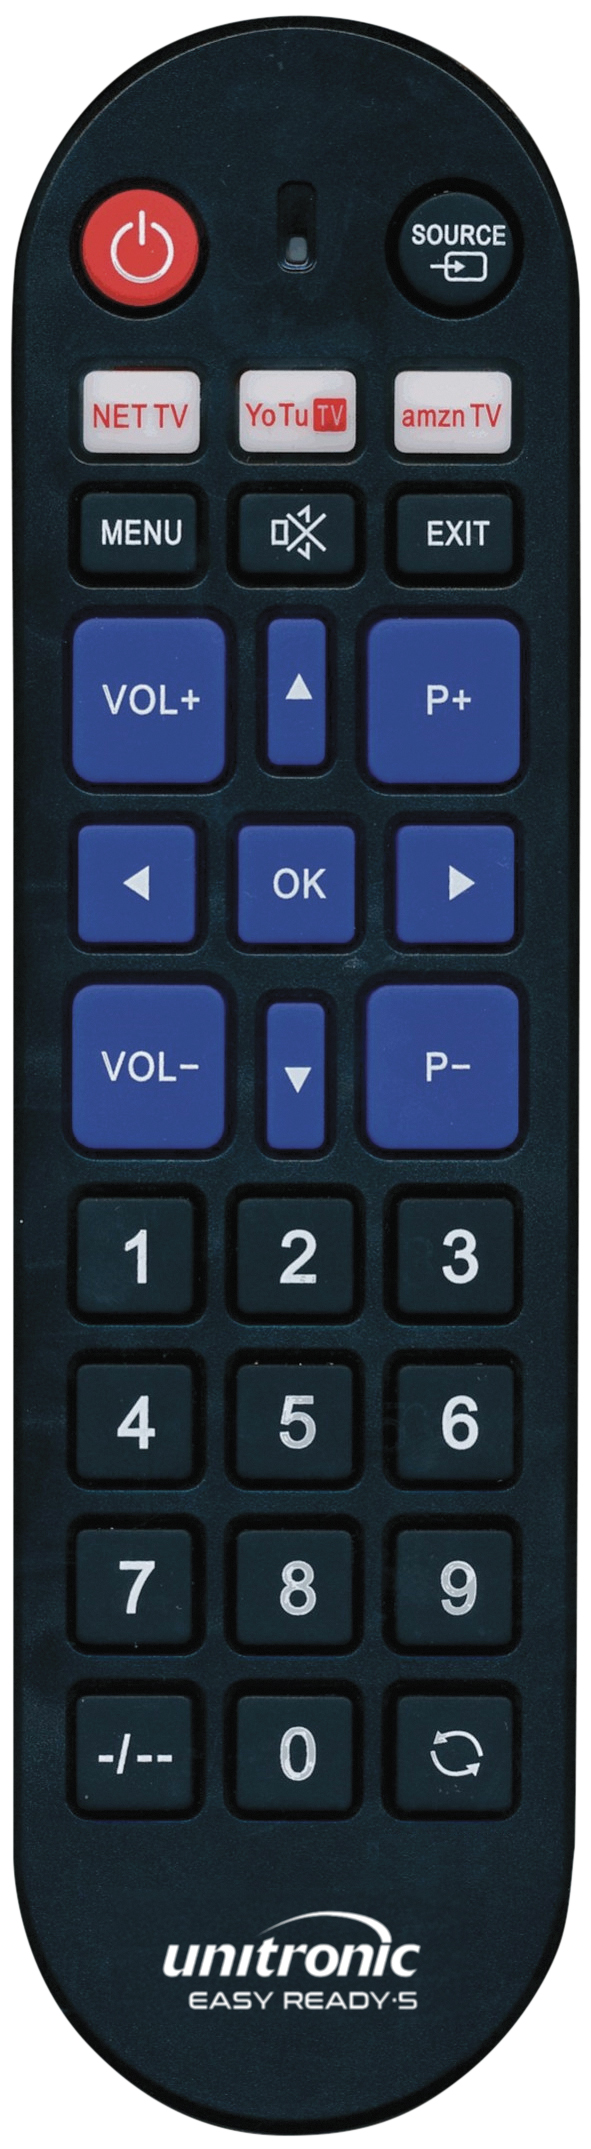 Easy Ready 5 universal remote control for Samsung, LG, Philips, Panasonic, Sony Smart TV